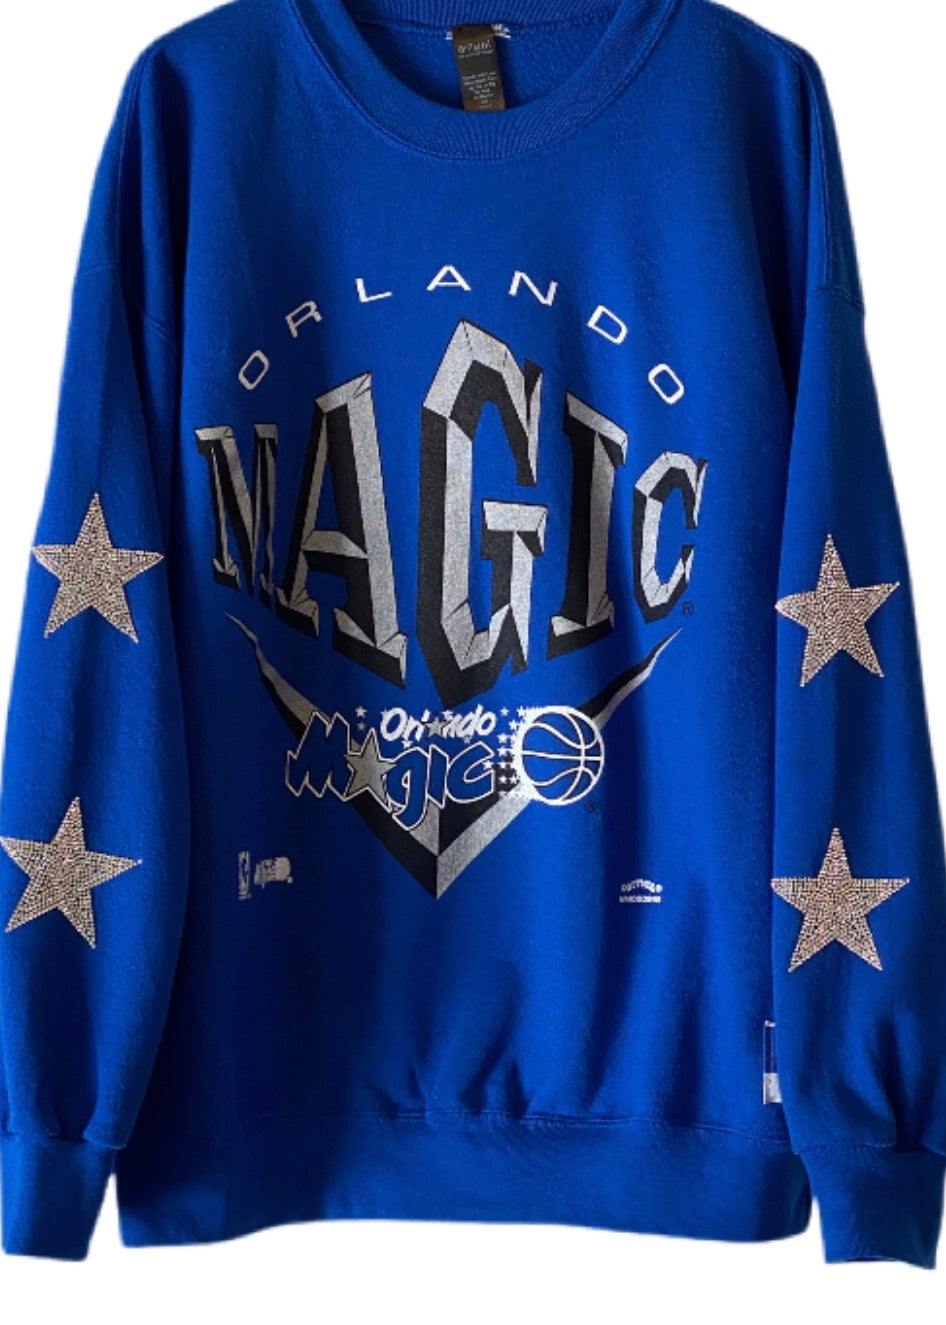 Orlando Magic, NBA One of a KIND Vintage Sweatshirt with Crystal Star Design & Custom Number